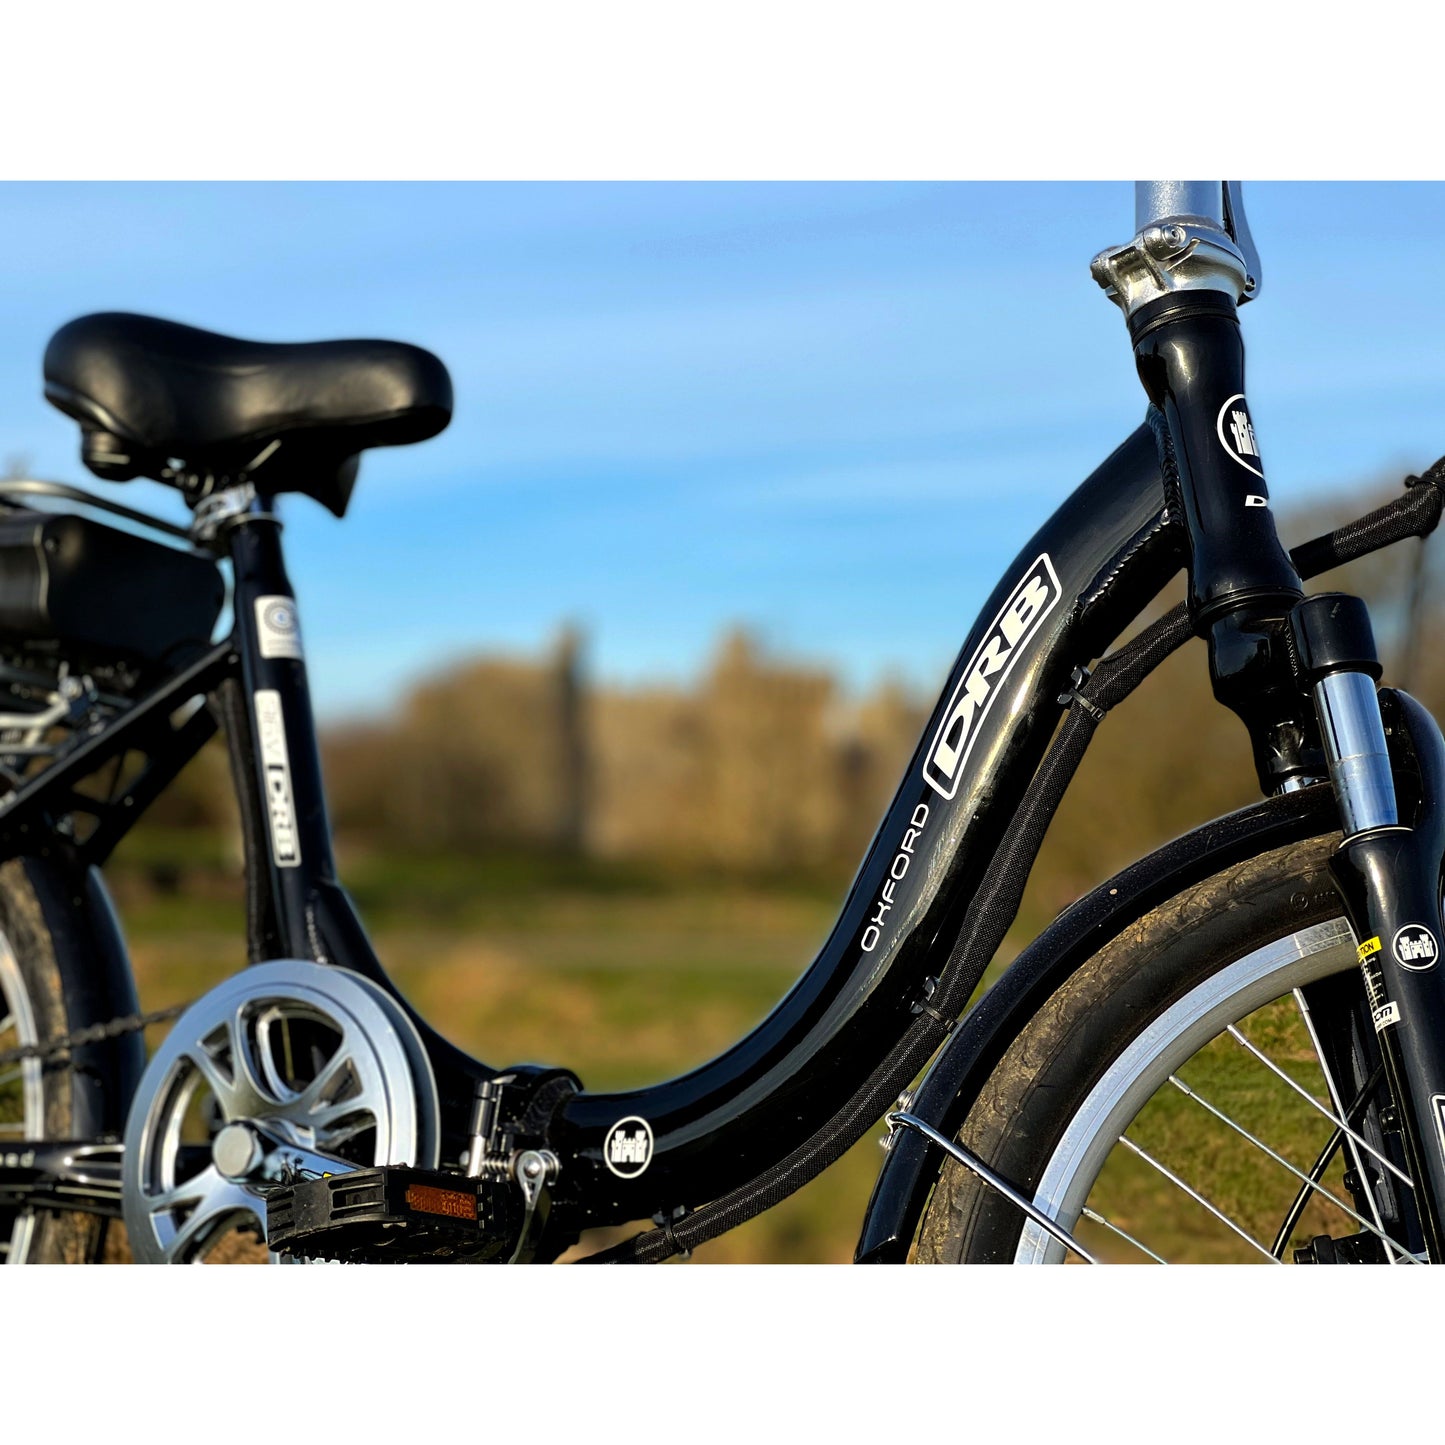 Dallingridge Oxford Folding Electric Bike - Gloss Black